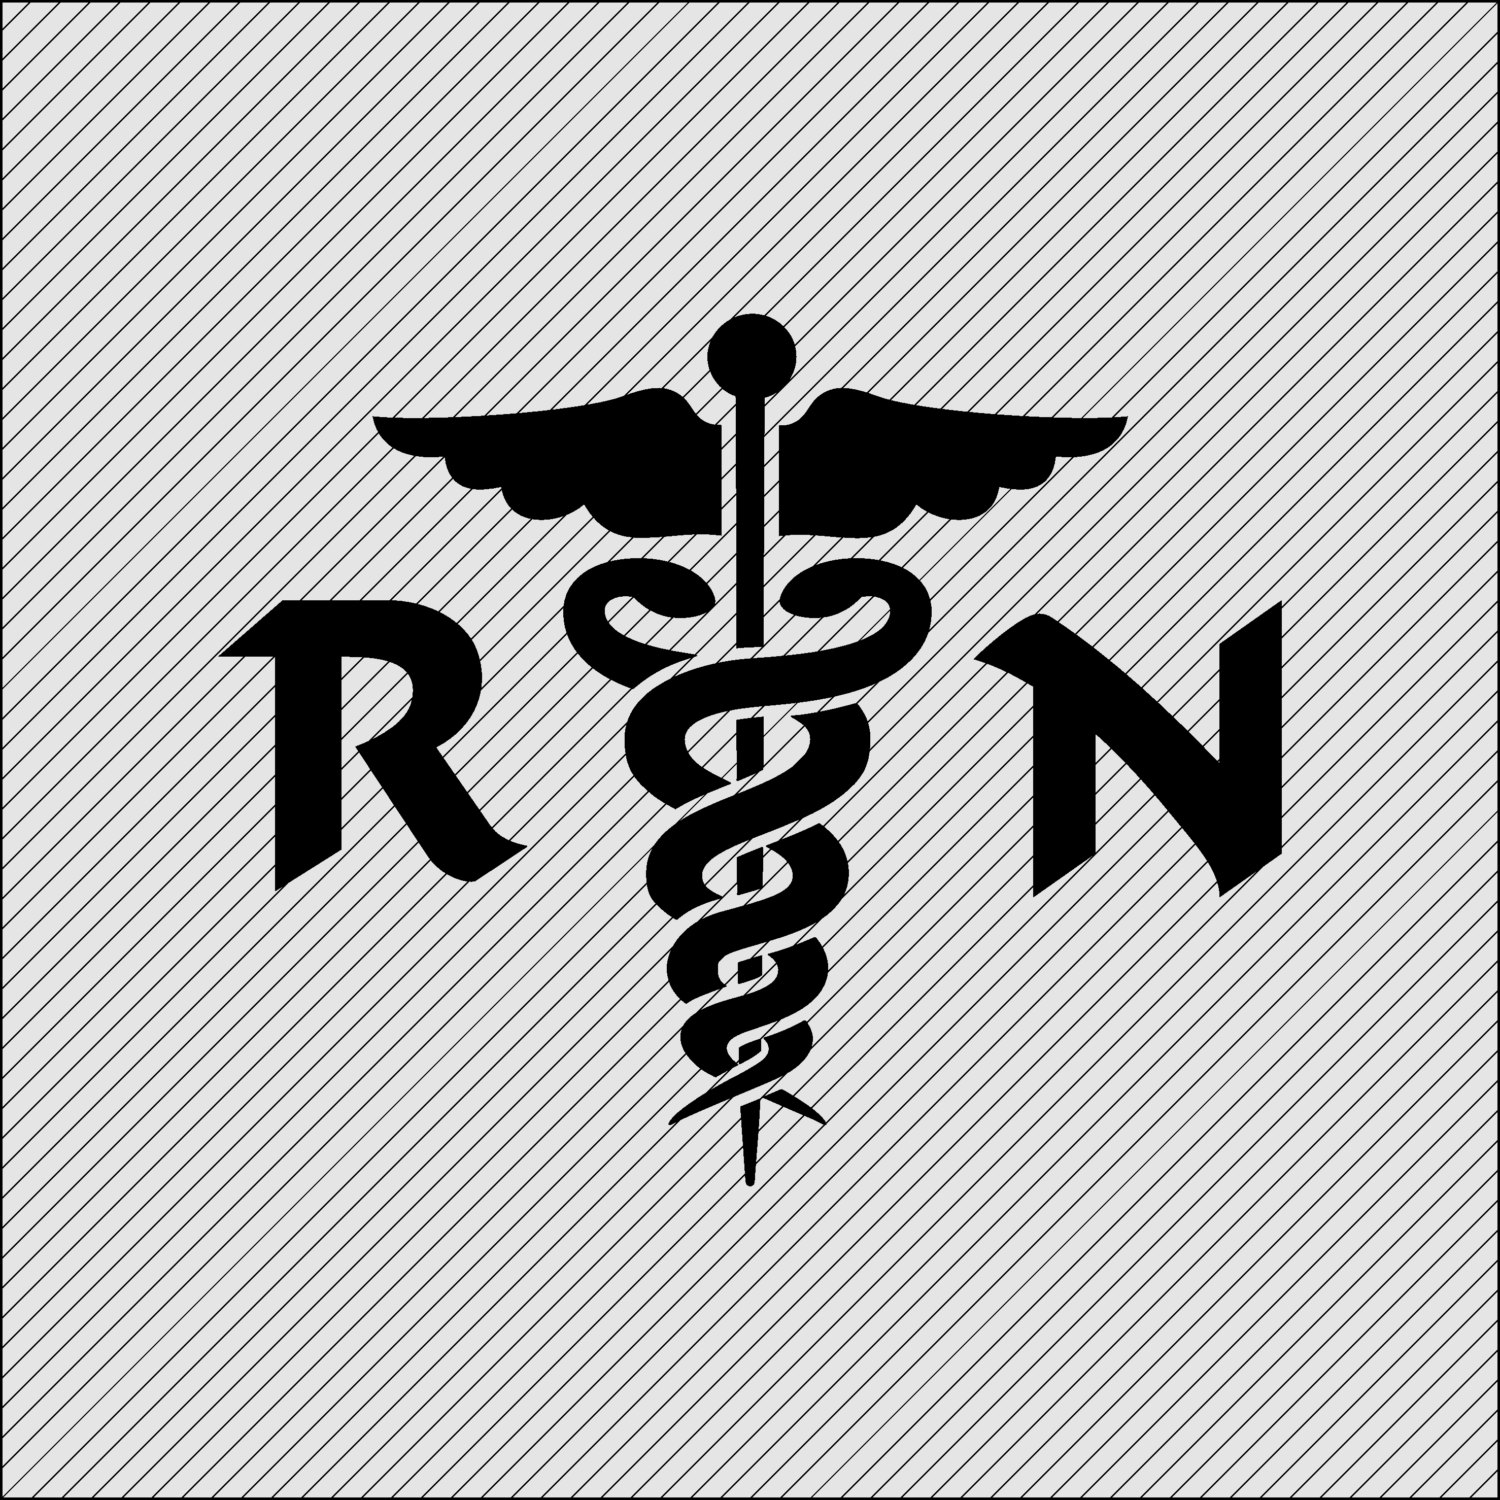 Rn Symbol Svg: RN Logo Clipart Svg Ai Dxf Cdr Pat Jpeg Png.